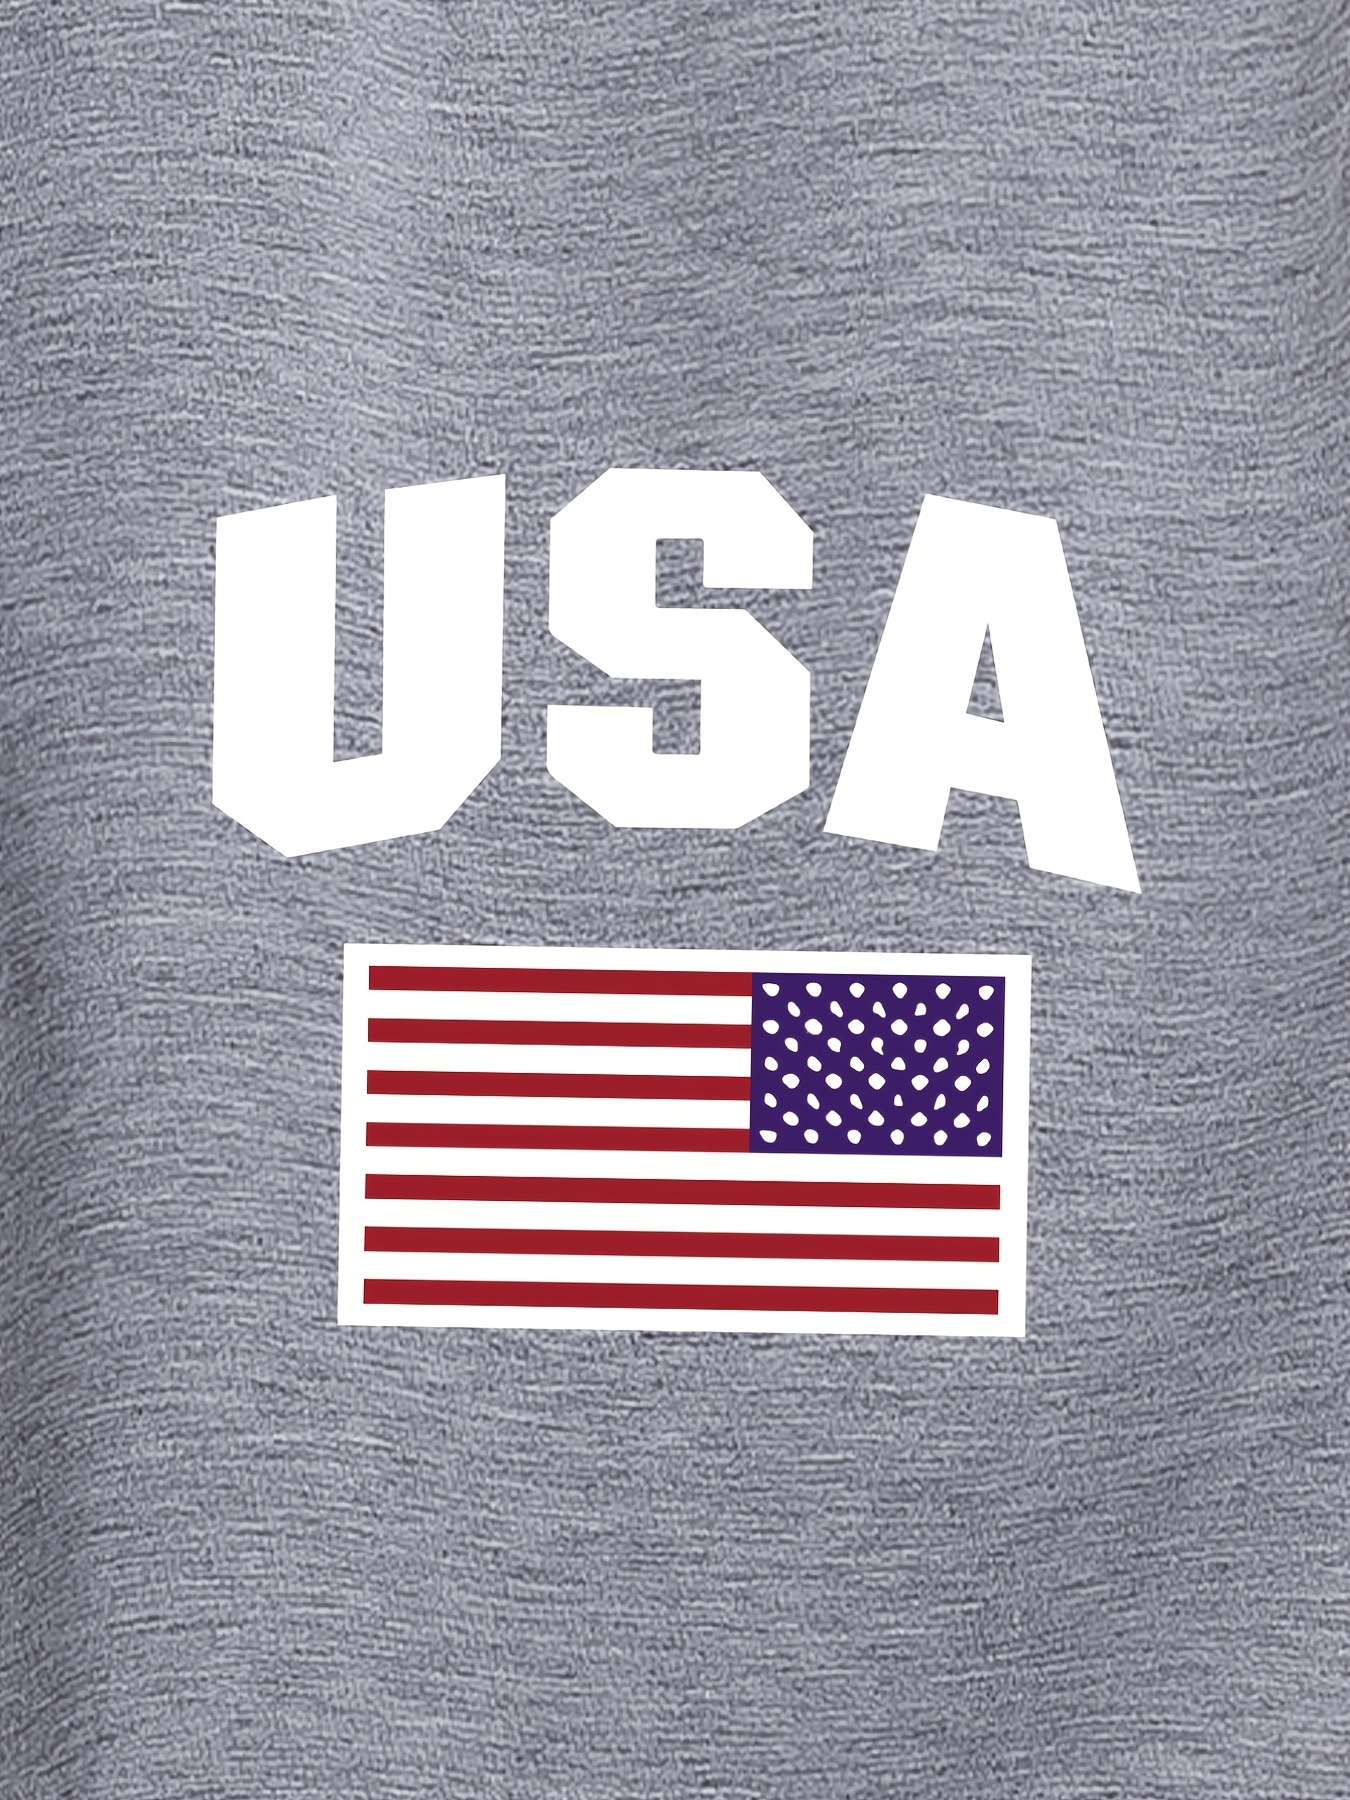 Nike Nationals Americana Flag T-Shirt - Men's